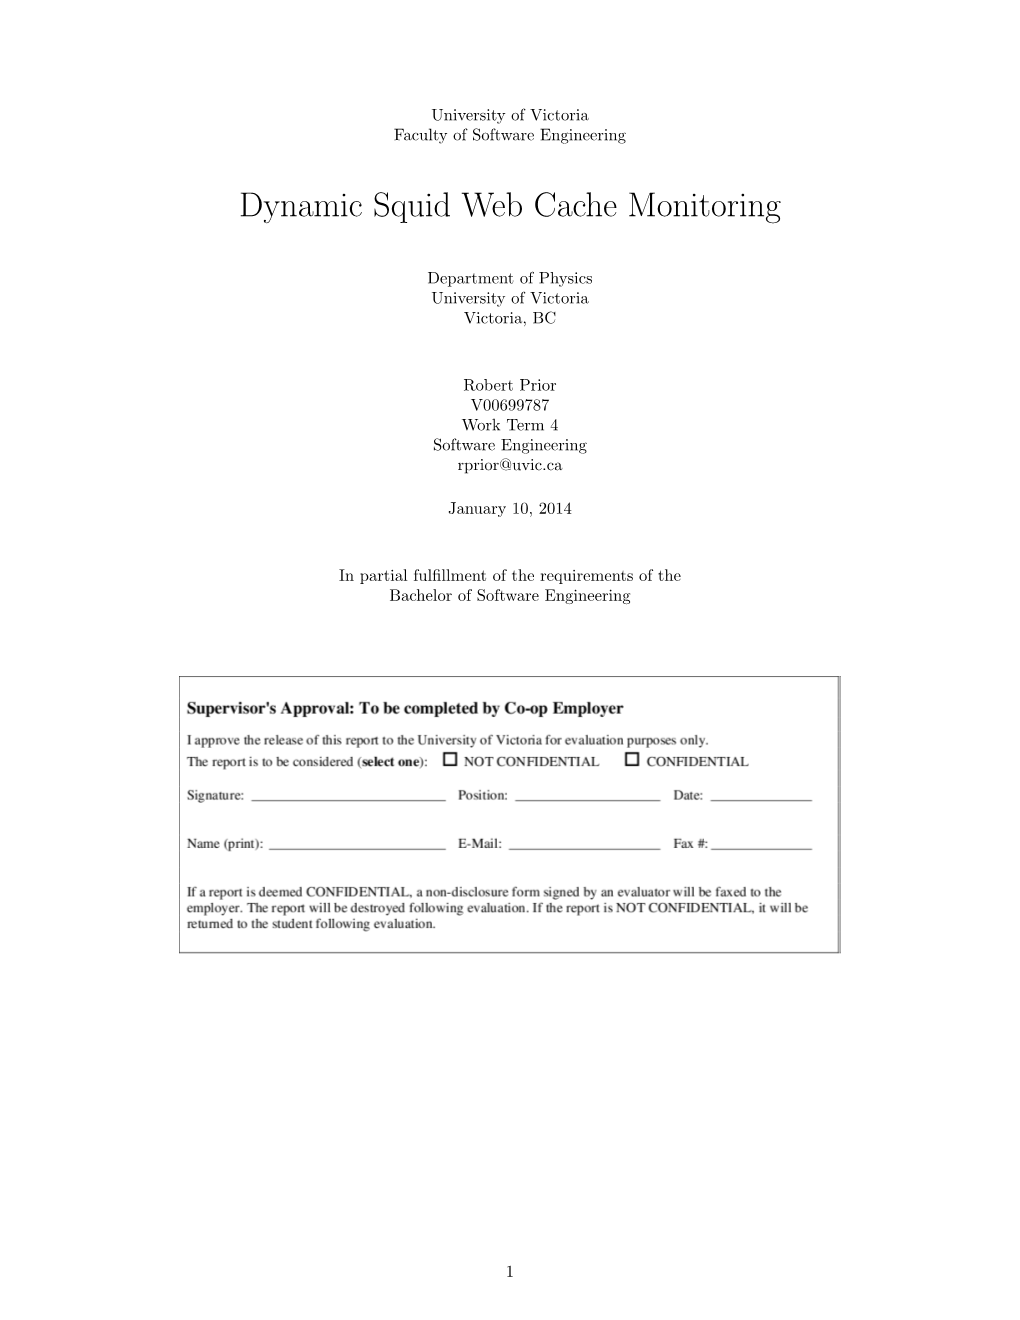 Dynamic Squid Web Cache Monitoring